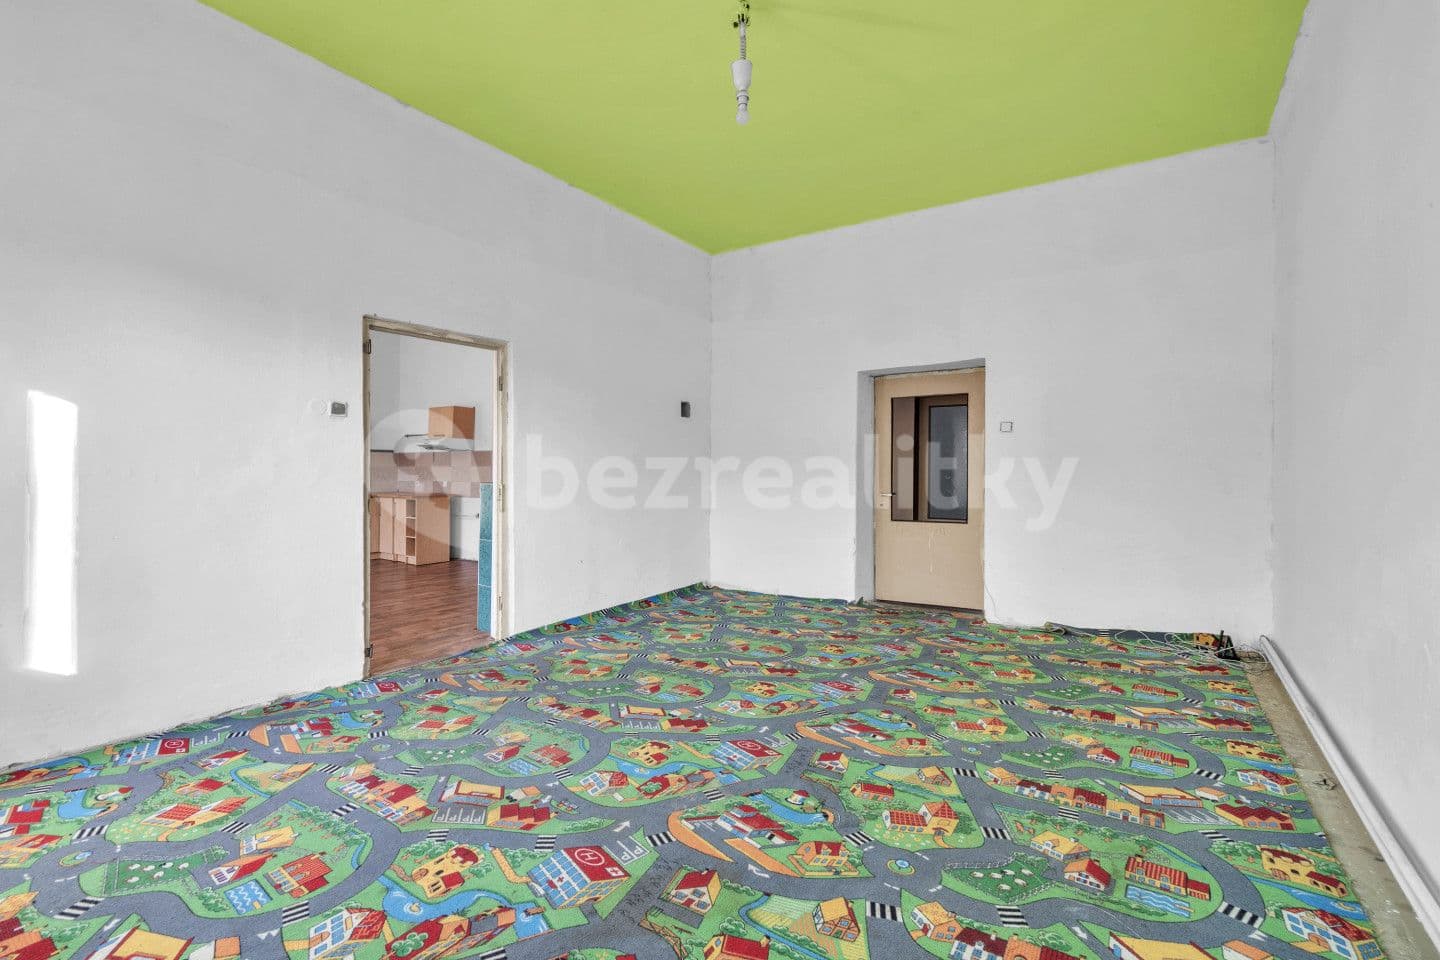 Predaj bytu 3-izbový 98 m², Čáslavská, Heřmanův Městec, Pardubický kraj